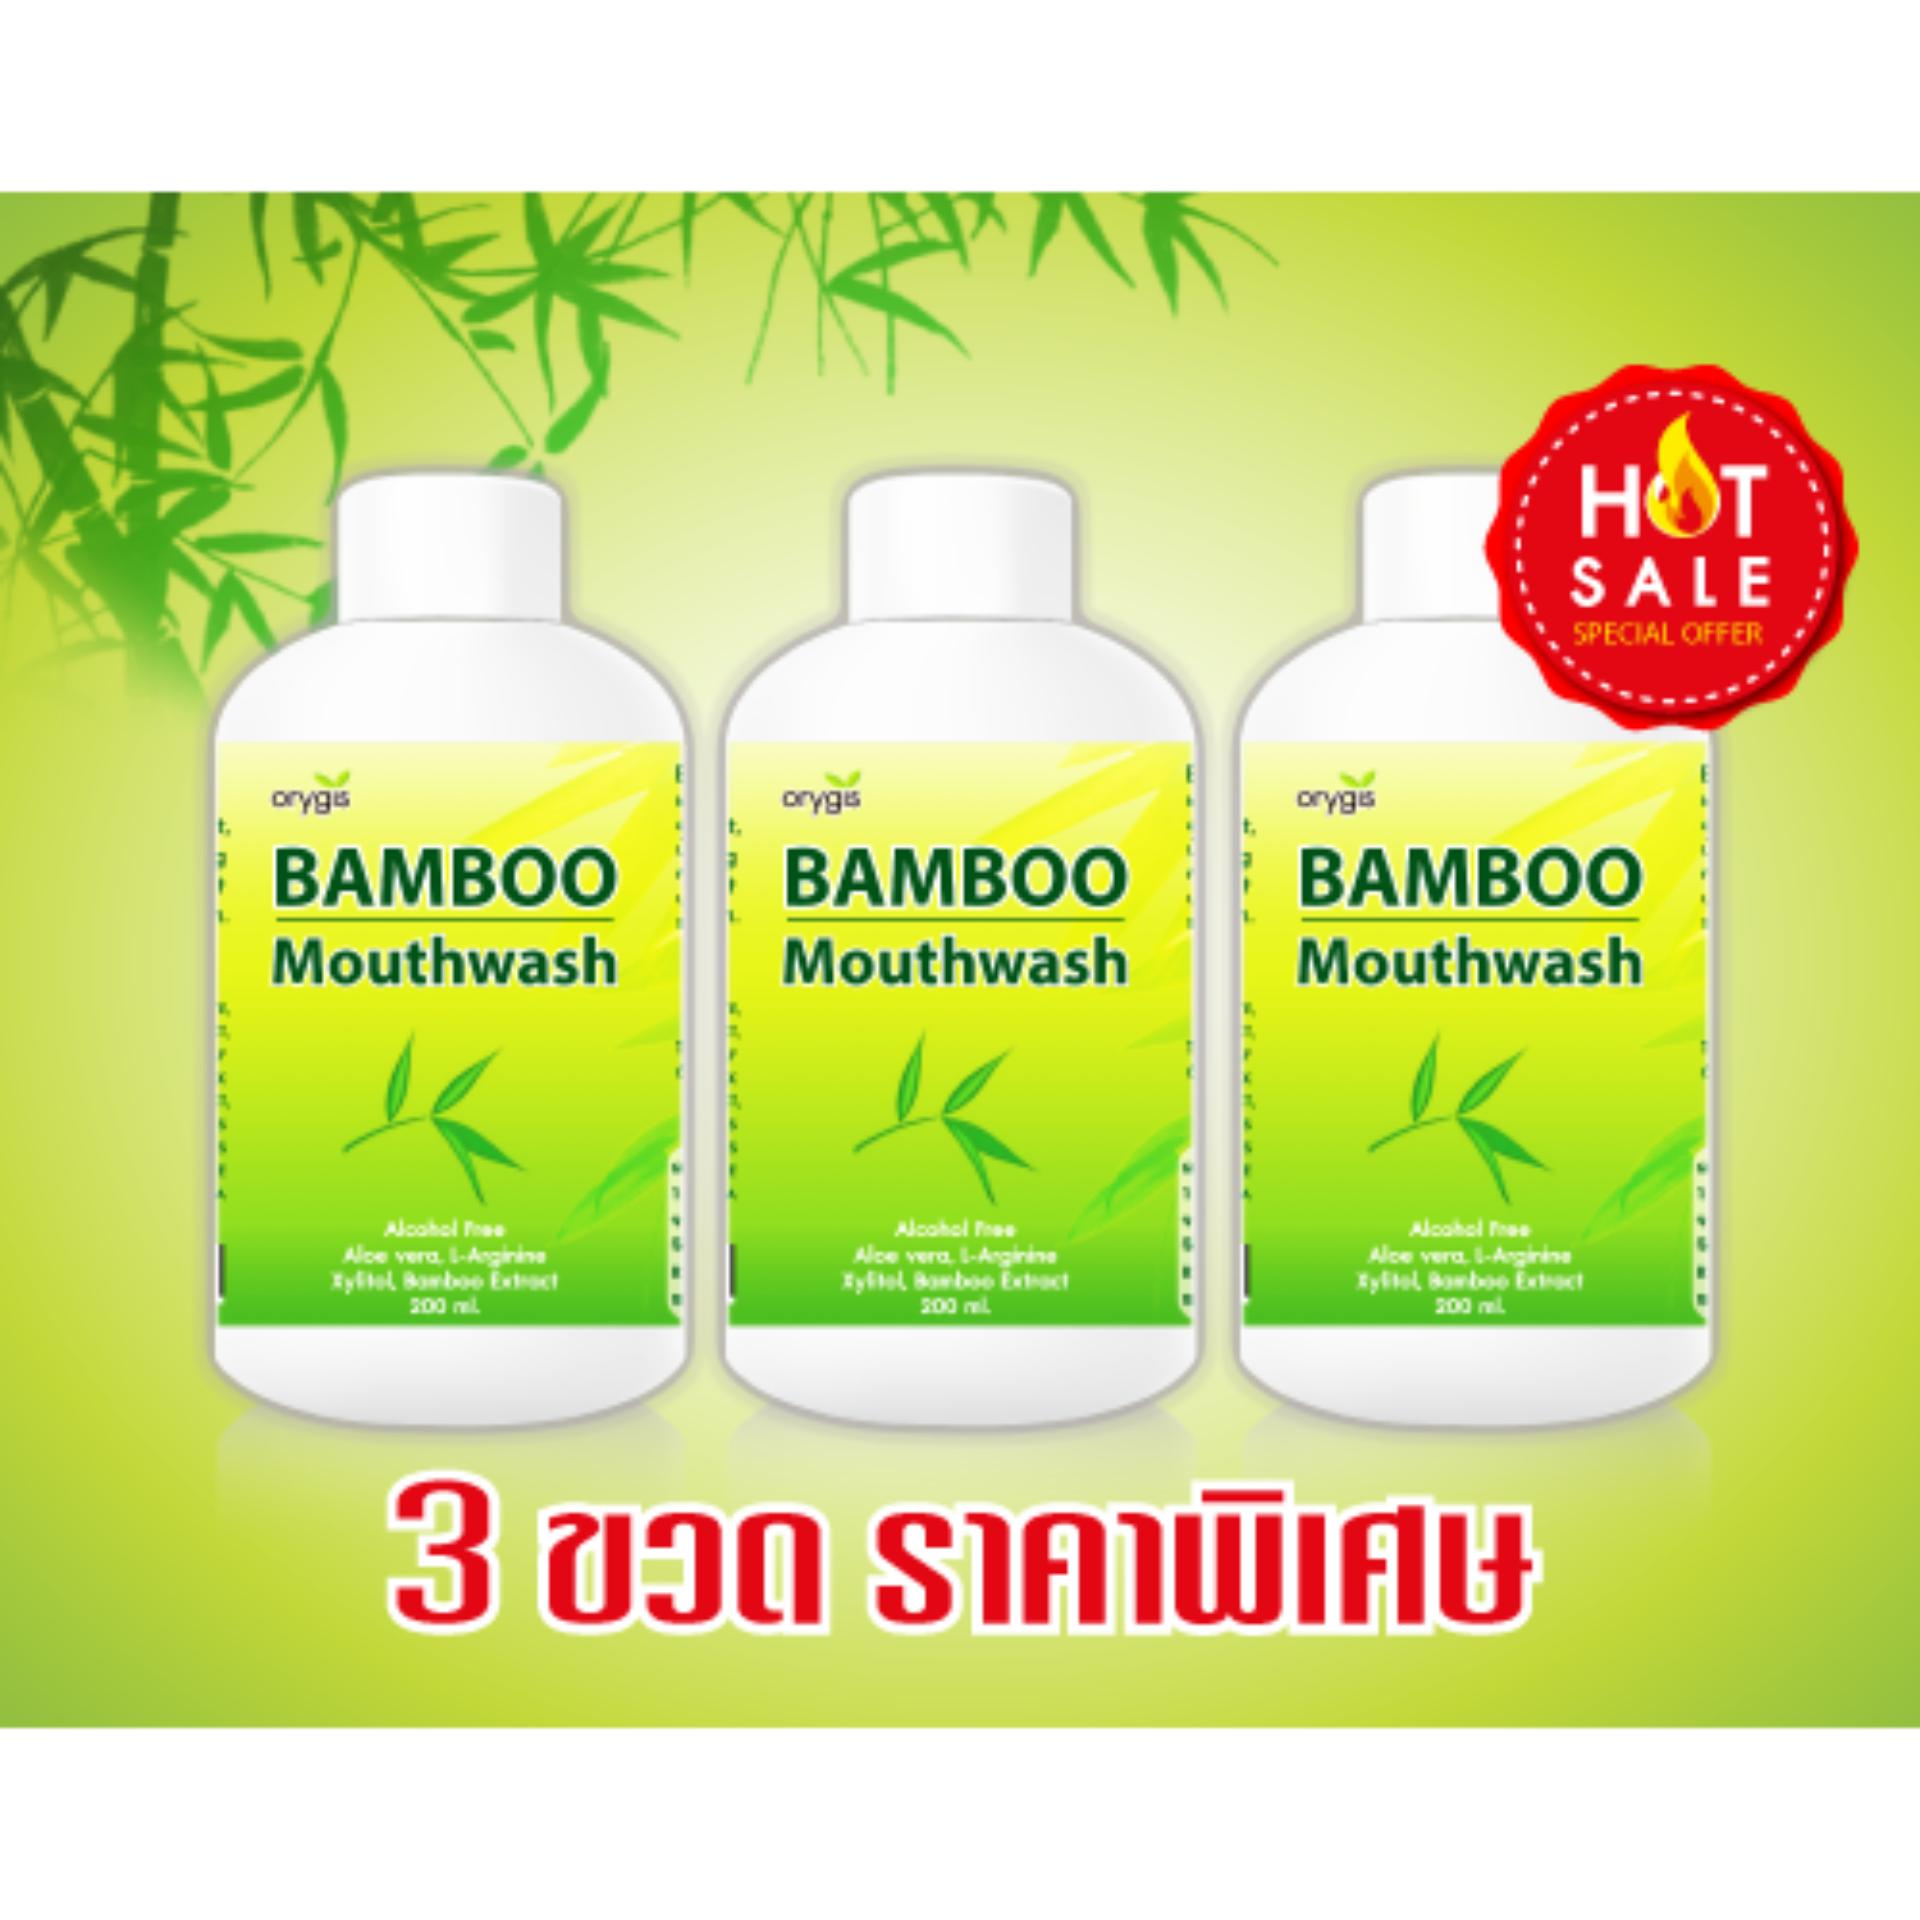 Bamboo Mouthwash แบมบู เม้าช์วอช น้ำยาบ้วนปาก สารสกัดจากใบไผ่และพืชสมุนไพร เซ็ต 3 ขวด (1 ขวด / 200 มิลลิลิตร) ราคา 270.- บาท